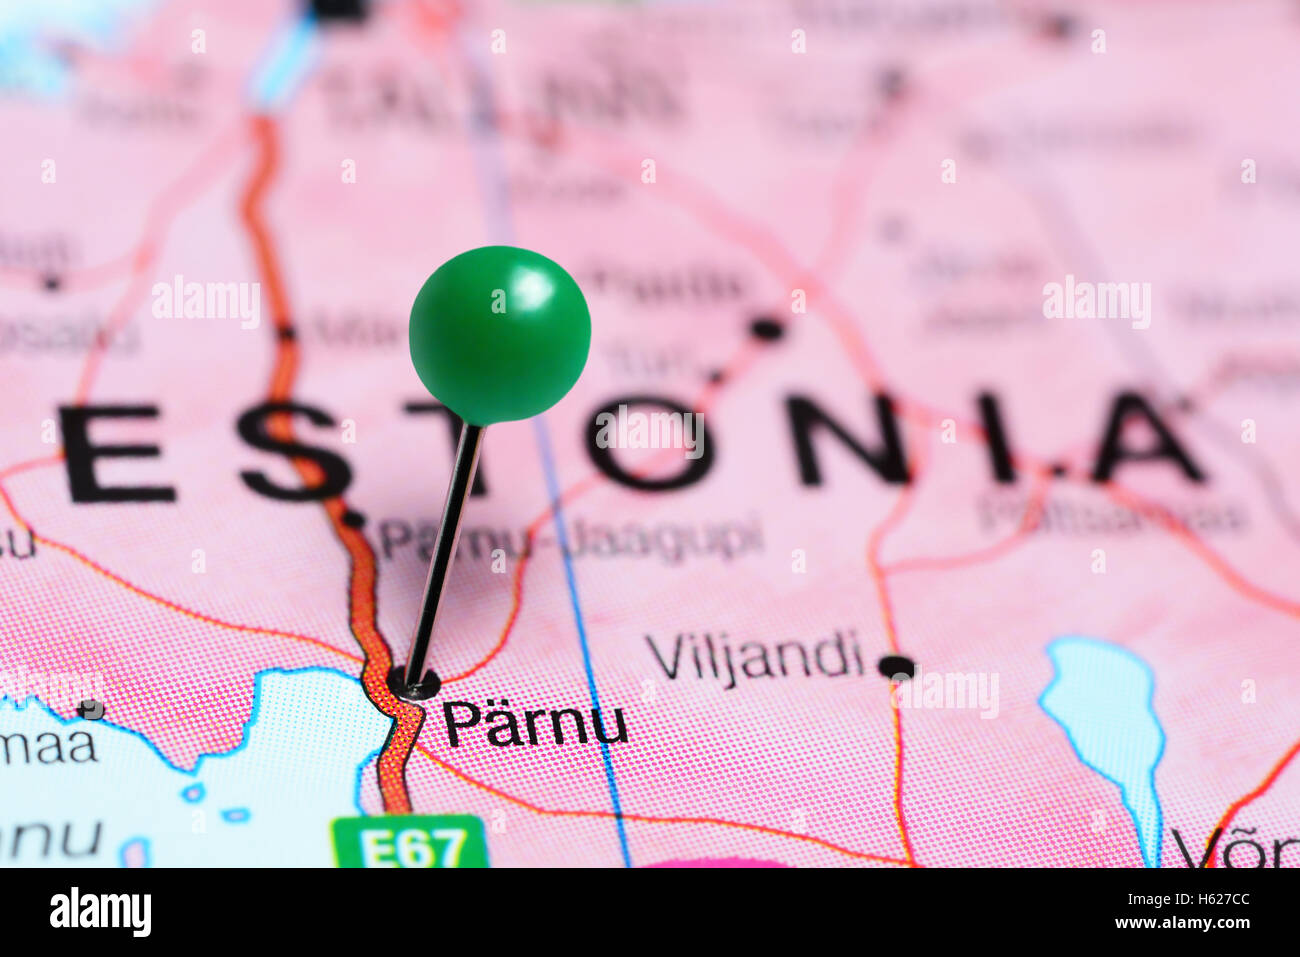 Parnu pinned on a map of Estonia Stock Photo